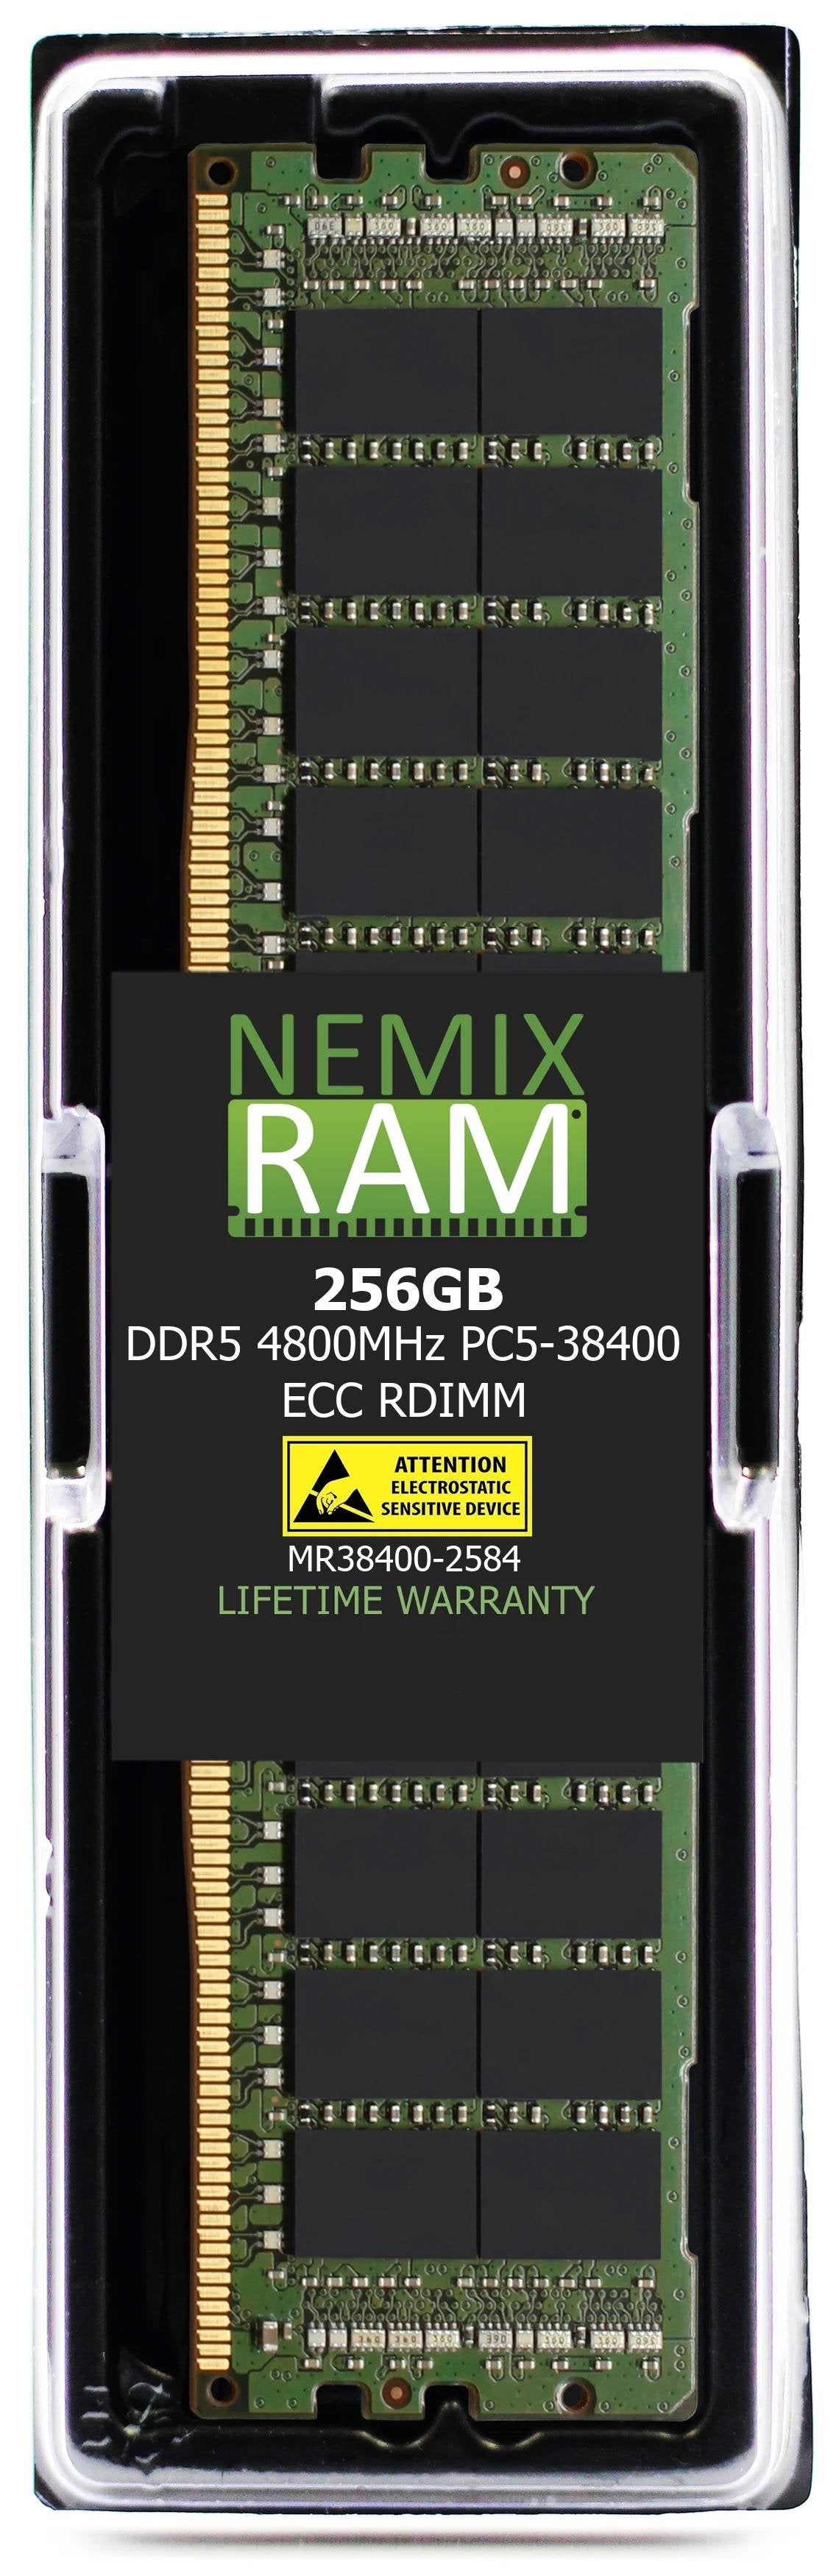 NEMIX RAM 256GB DDR5 4800MHz PC5-38400 ECC RDIMM Compatible with Hynix HMCT14MEERA147N